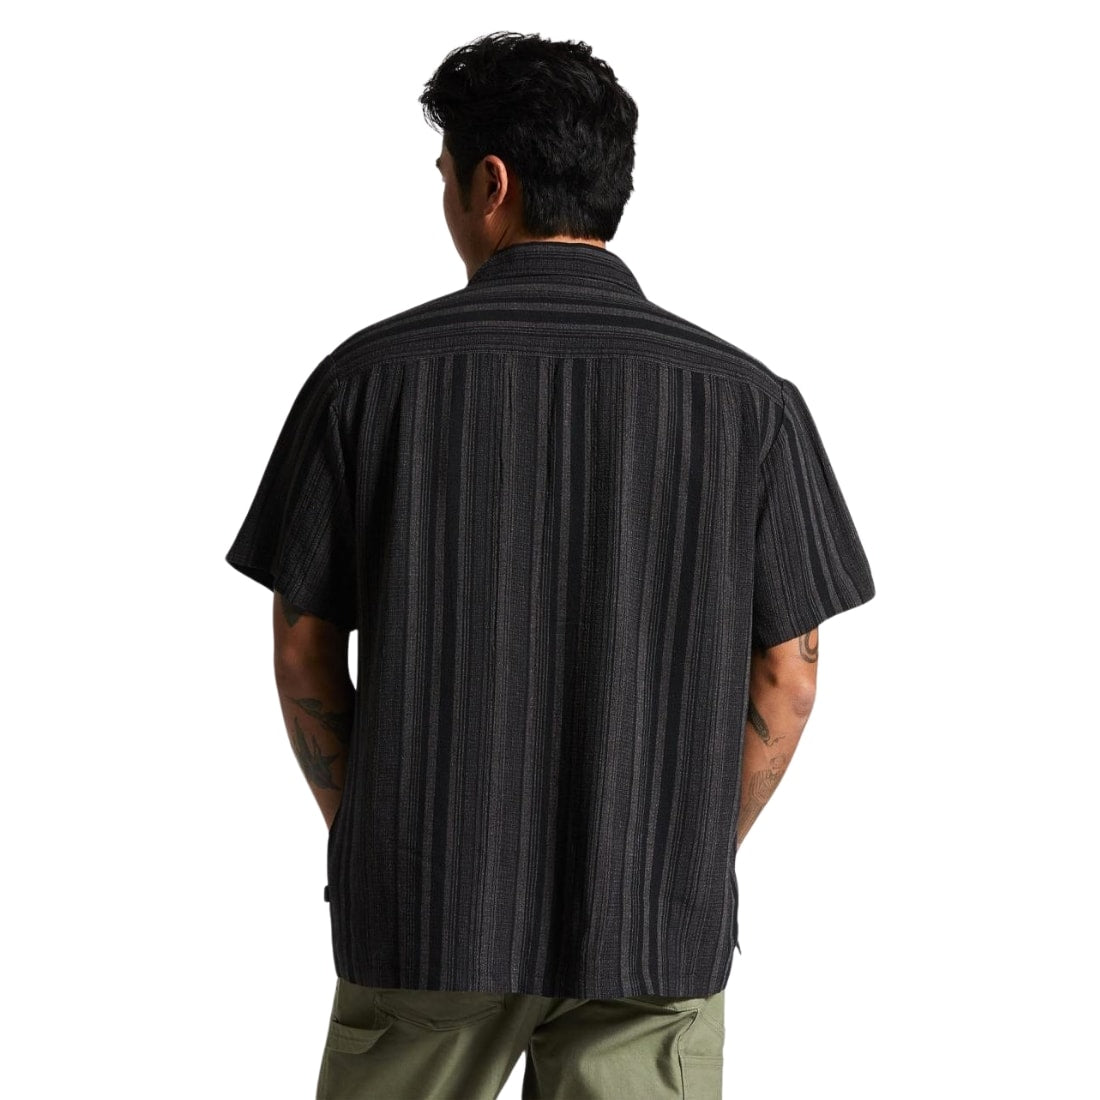 Brixton Bunker Seersucker Short Sleeve Shirt - Black/Charcoal